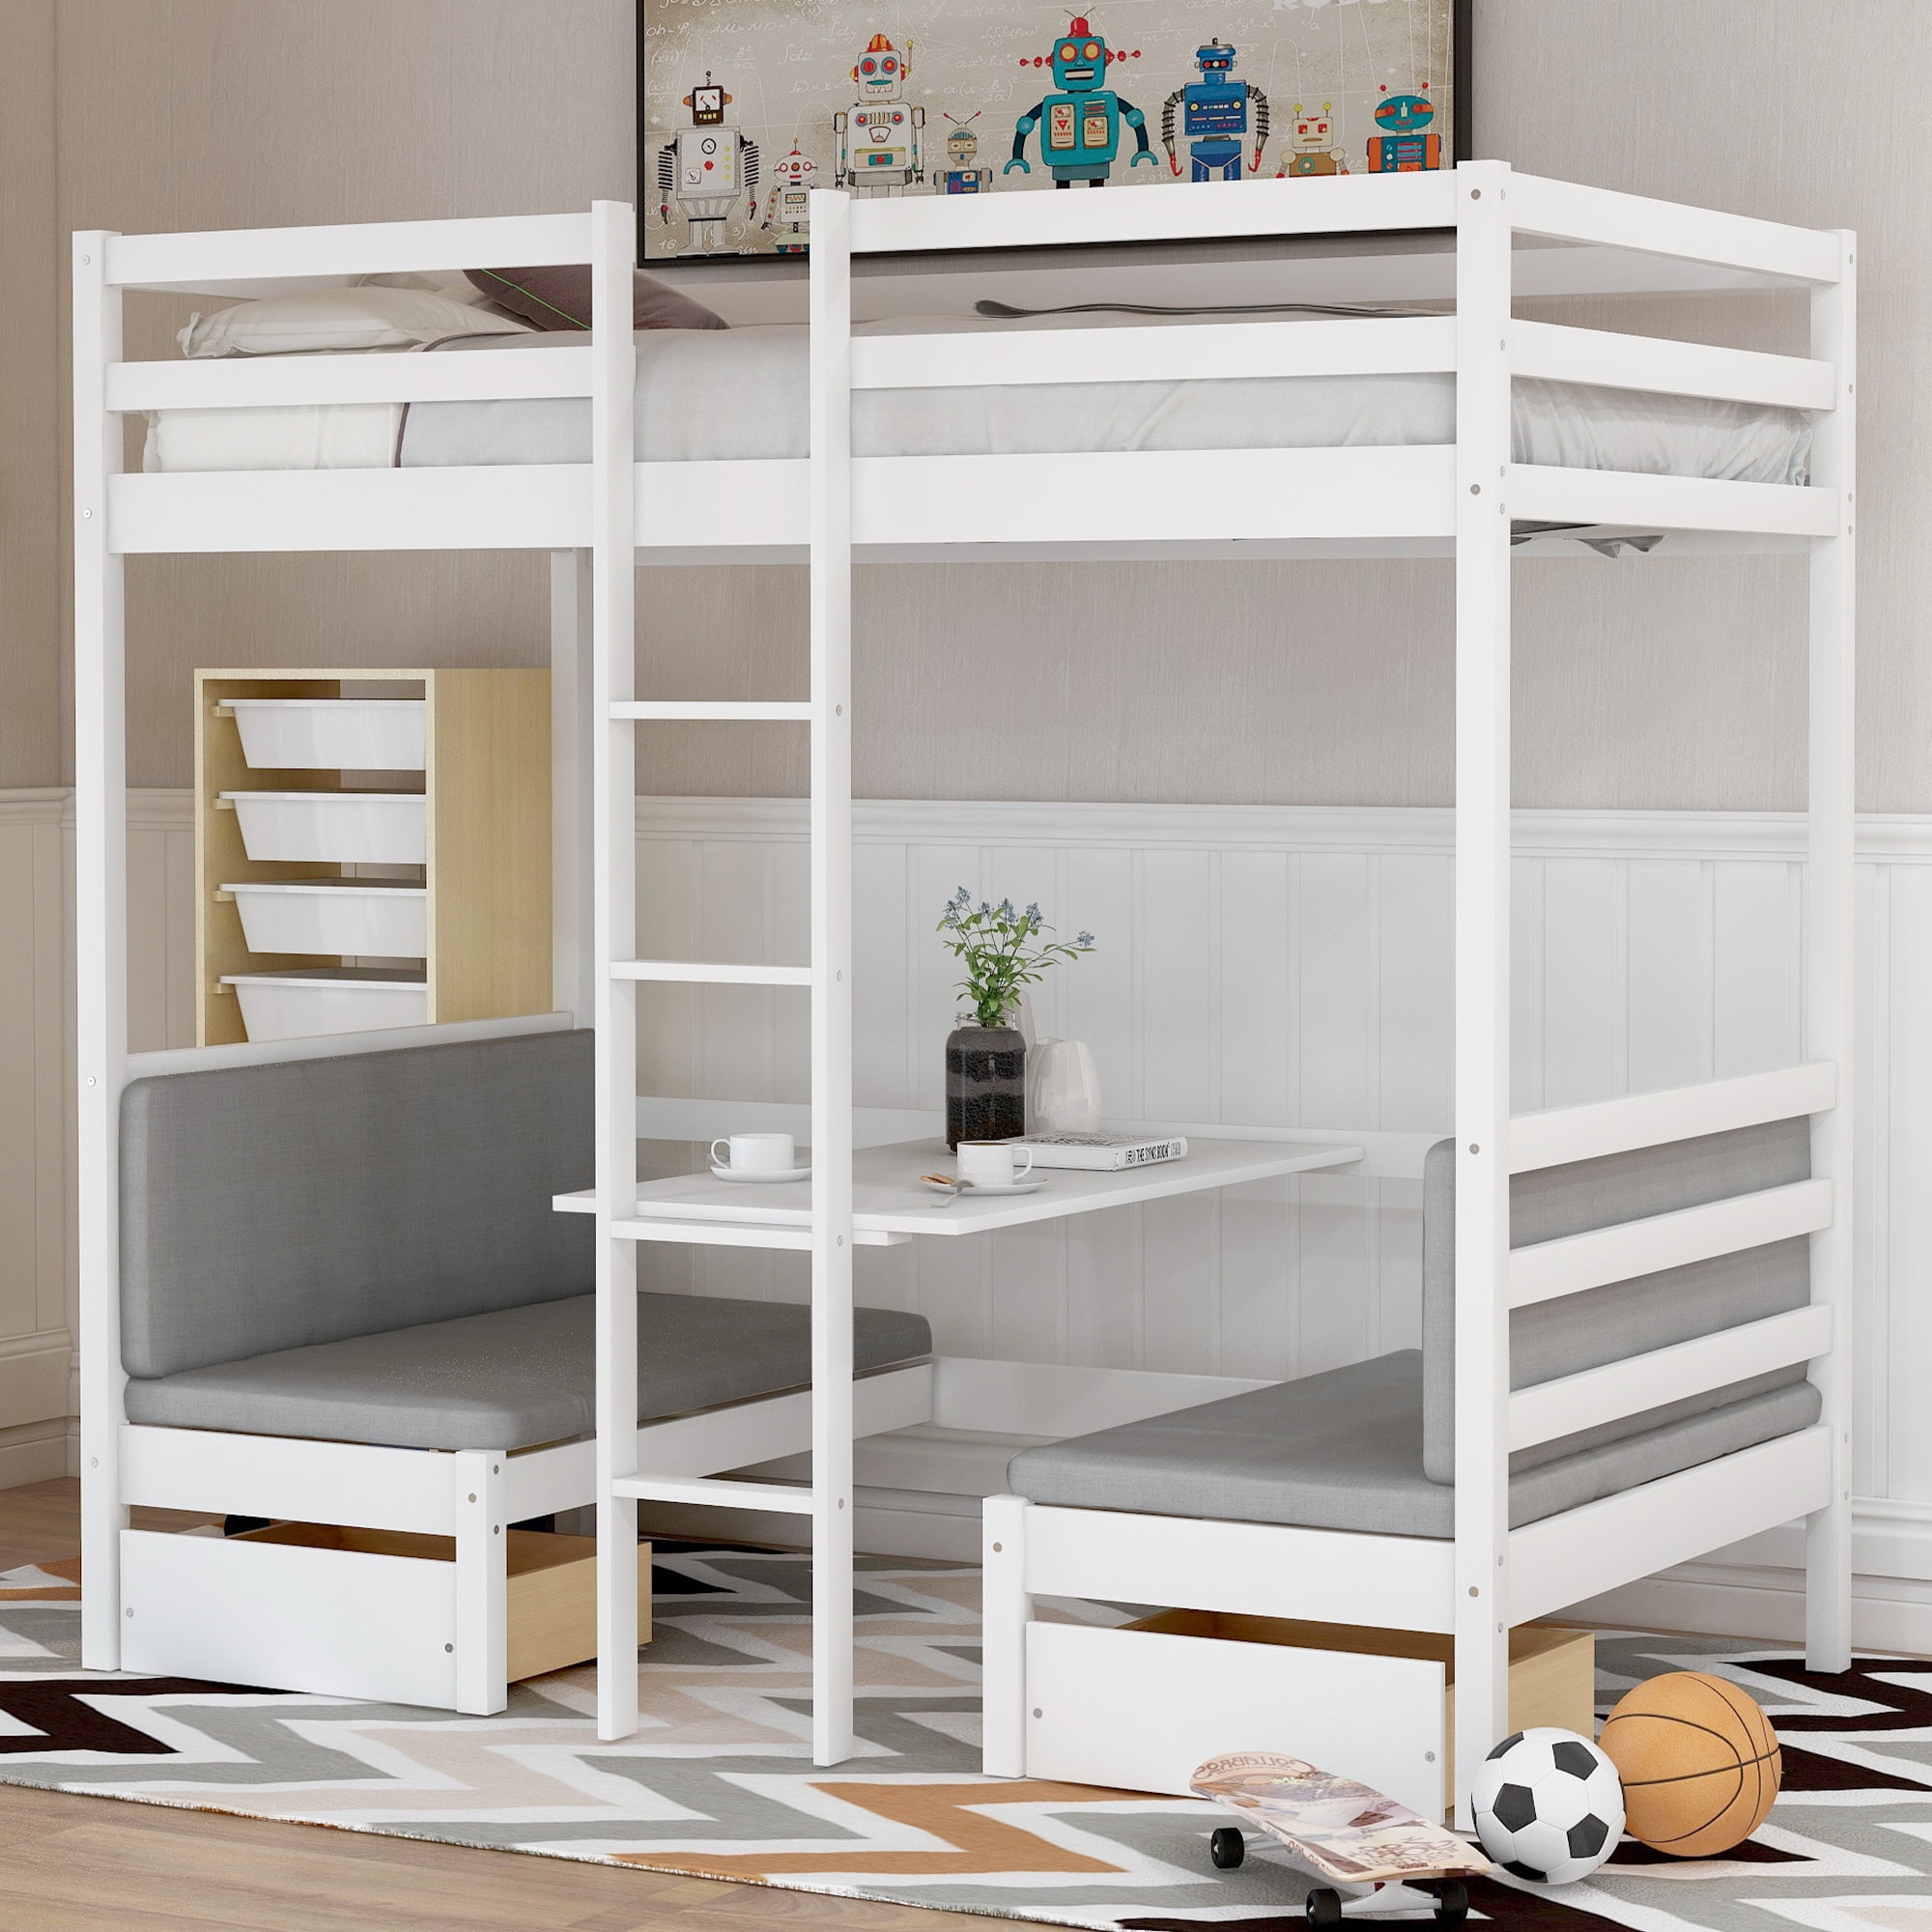 Details about   Konrad Furniture Paris Solid Hardwood Bunk Bed Twin Over Twin Espresso 